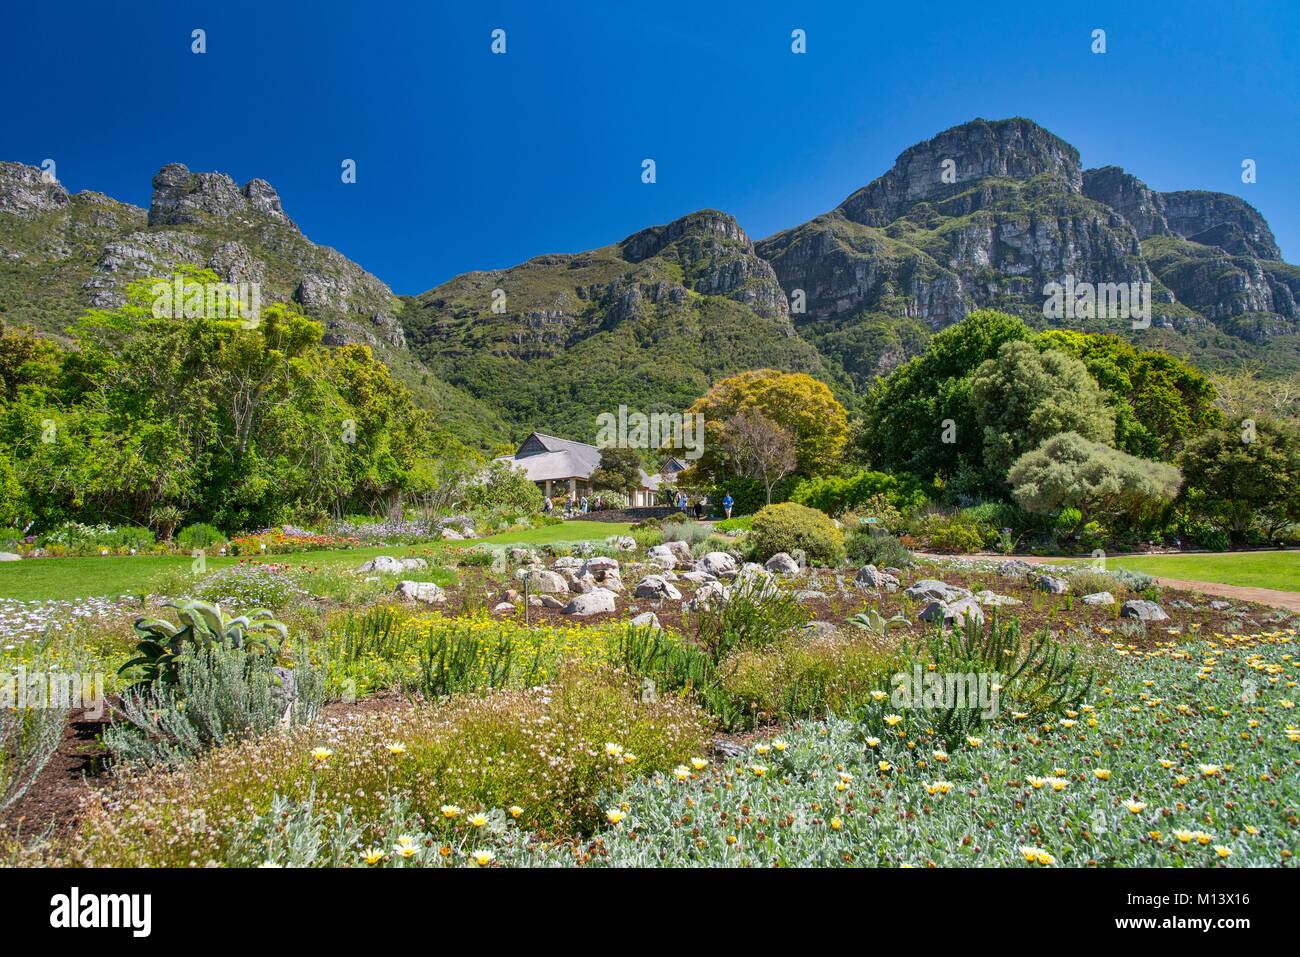 South Africa, Western Cape, Cape Town, Jardin botanique national Kirstenbosch Stock Photo